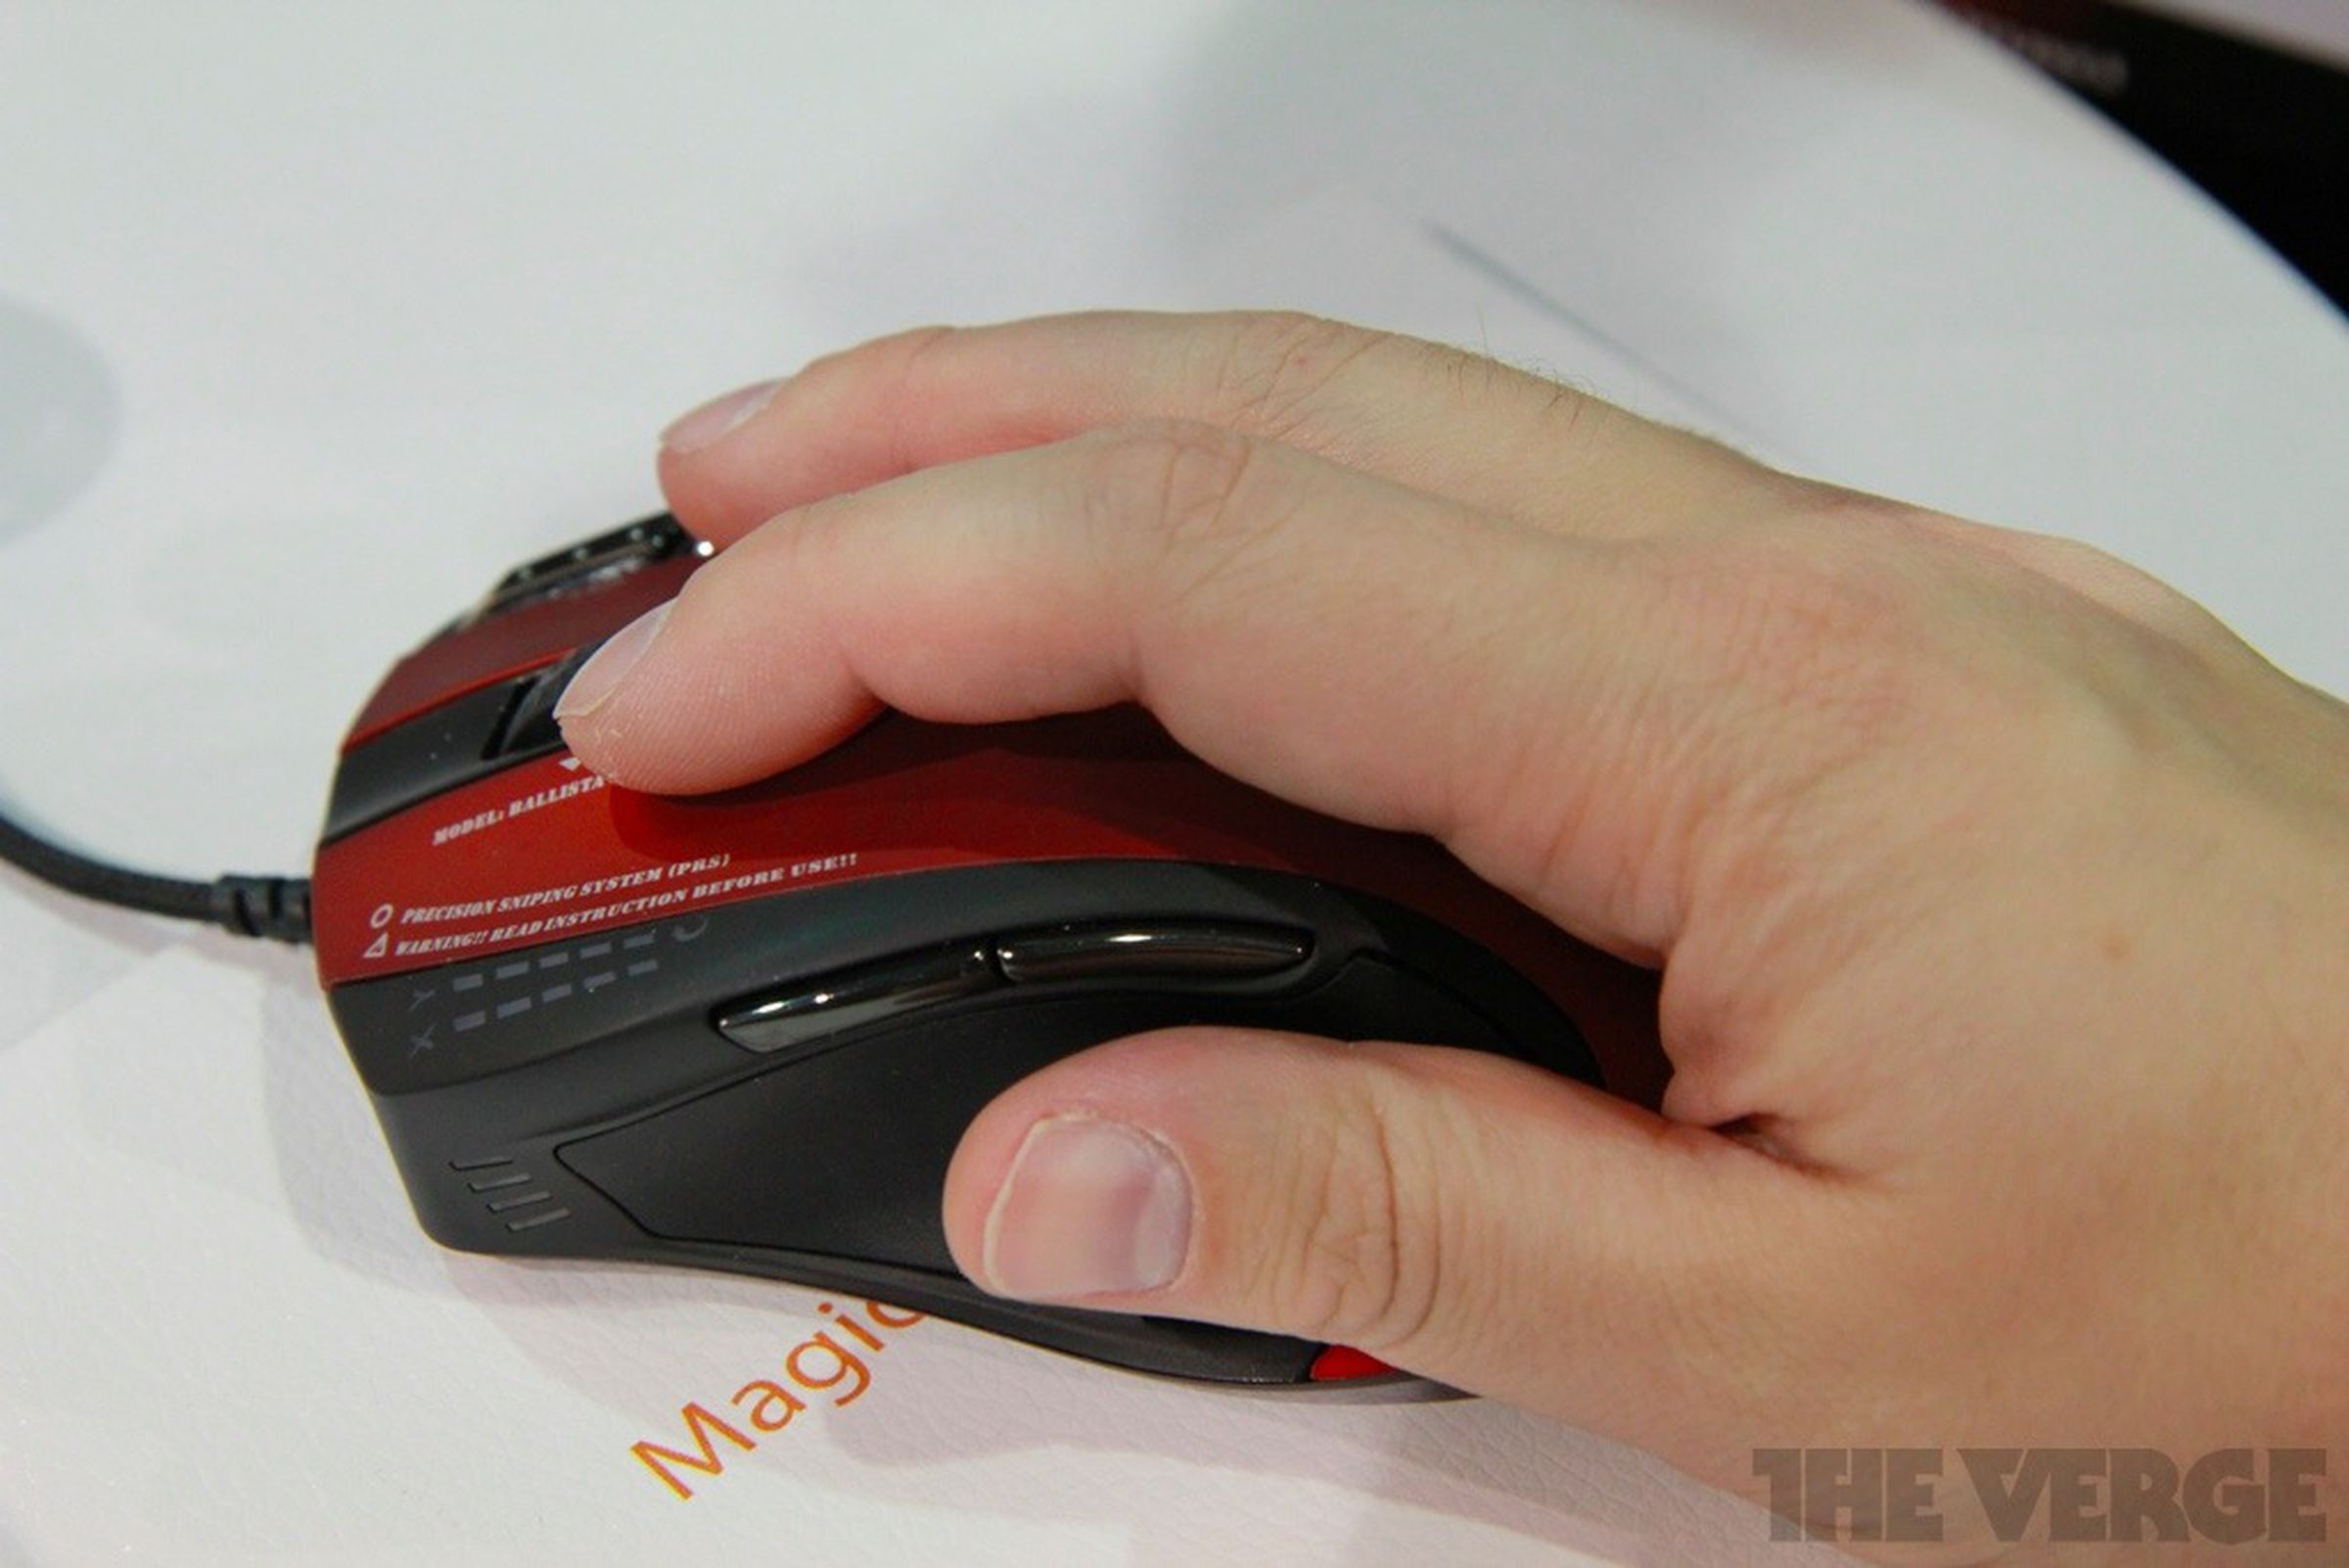 Shogun Bros. Ballista MK-1 gaming mouse hands-on pictures